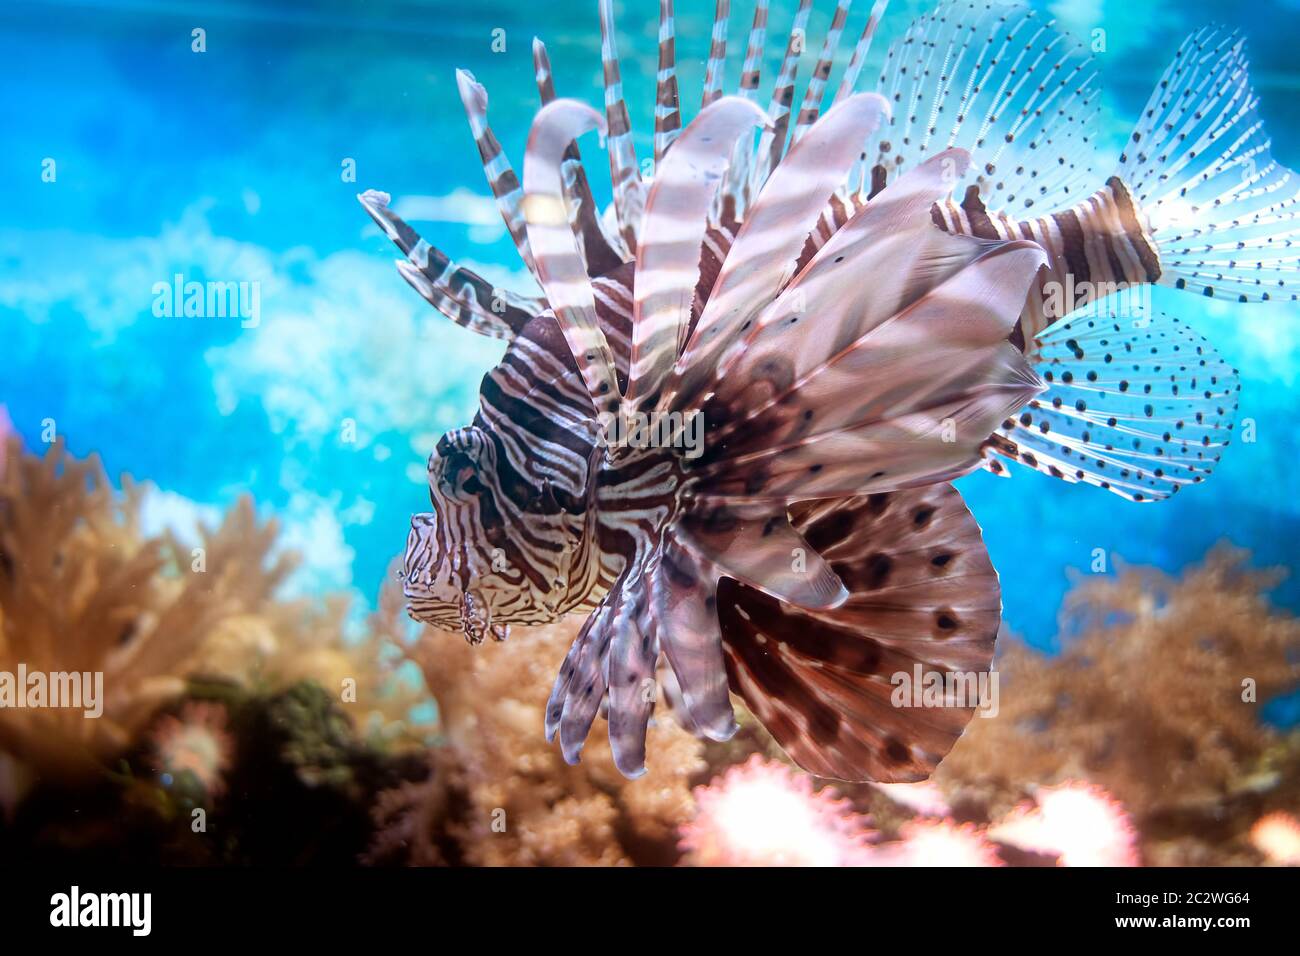 Lionfish, pterois lunulata swimming between the corals in the aquarium. Stock Photo